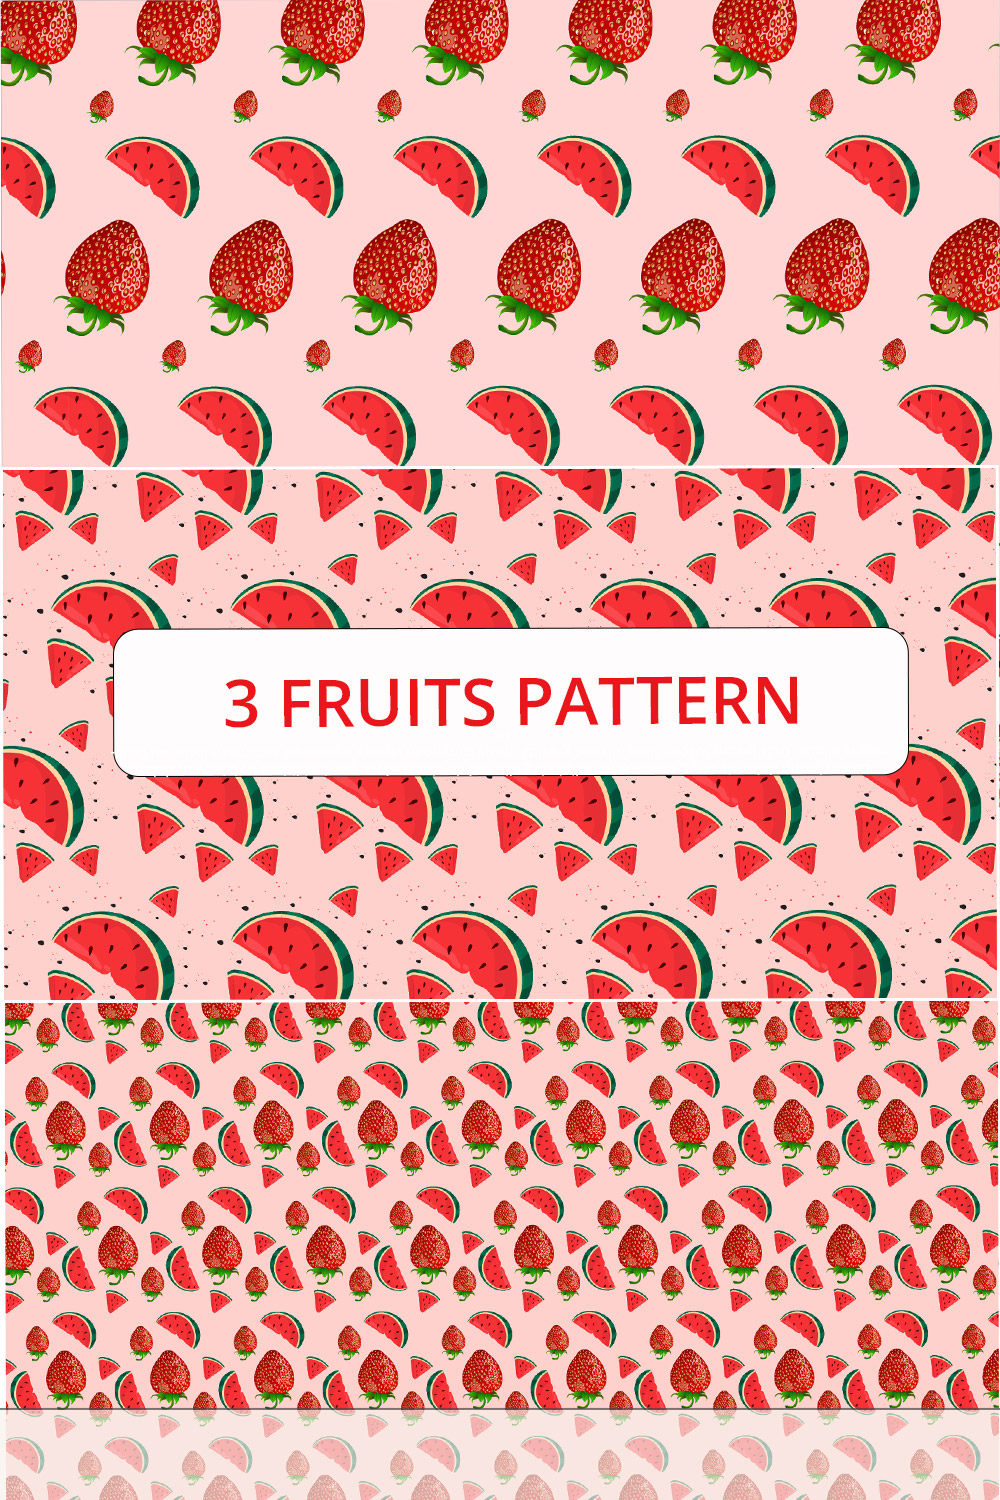 Strawberry & watermelon pattern design pinterest preview image.